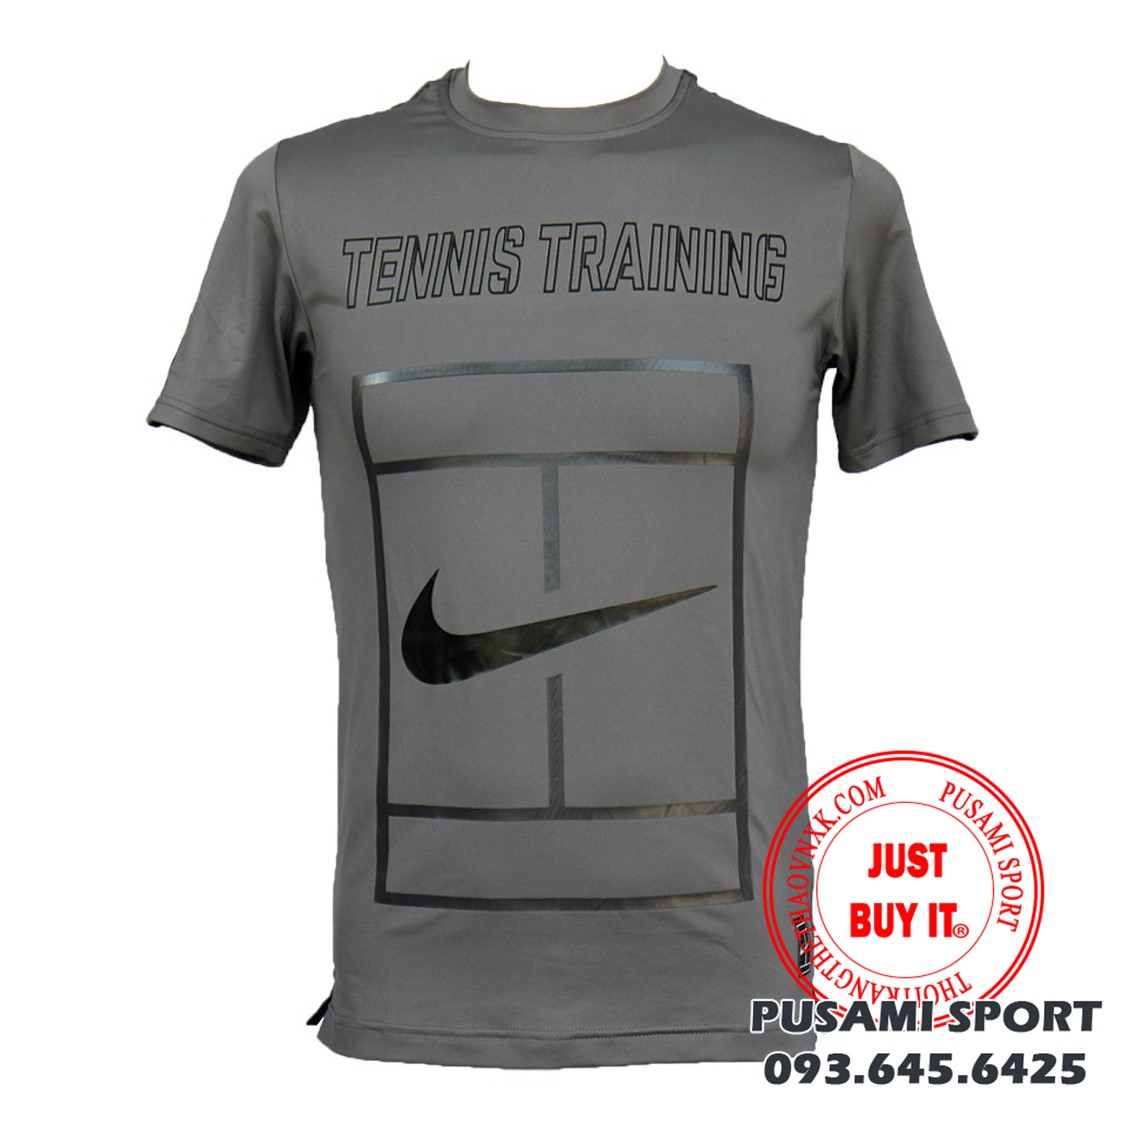 Áo thể thao Nike Tennis Training (Ghi đậm)